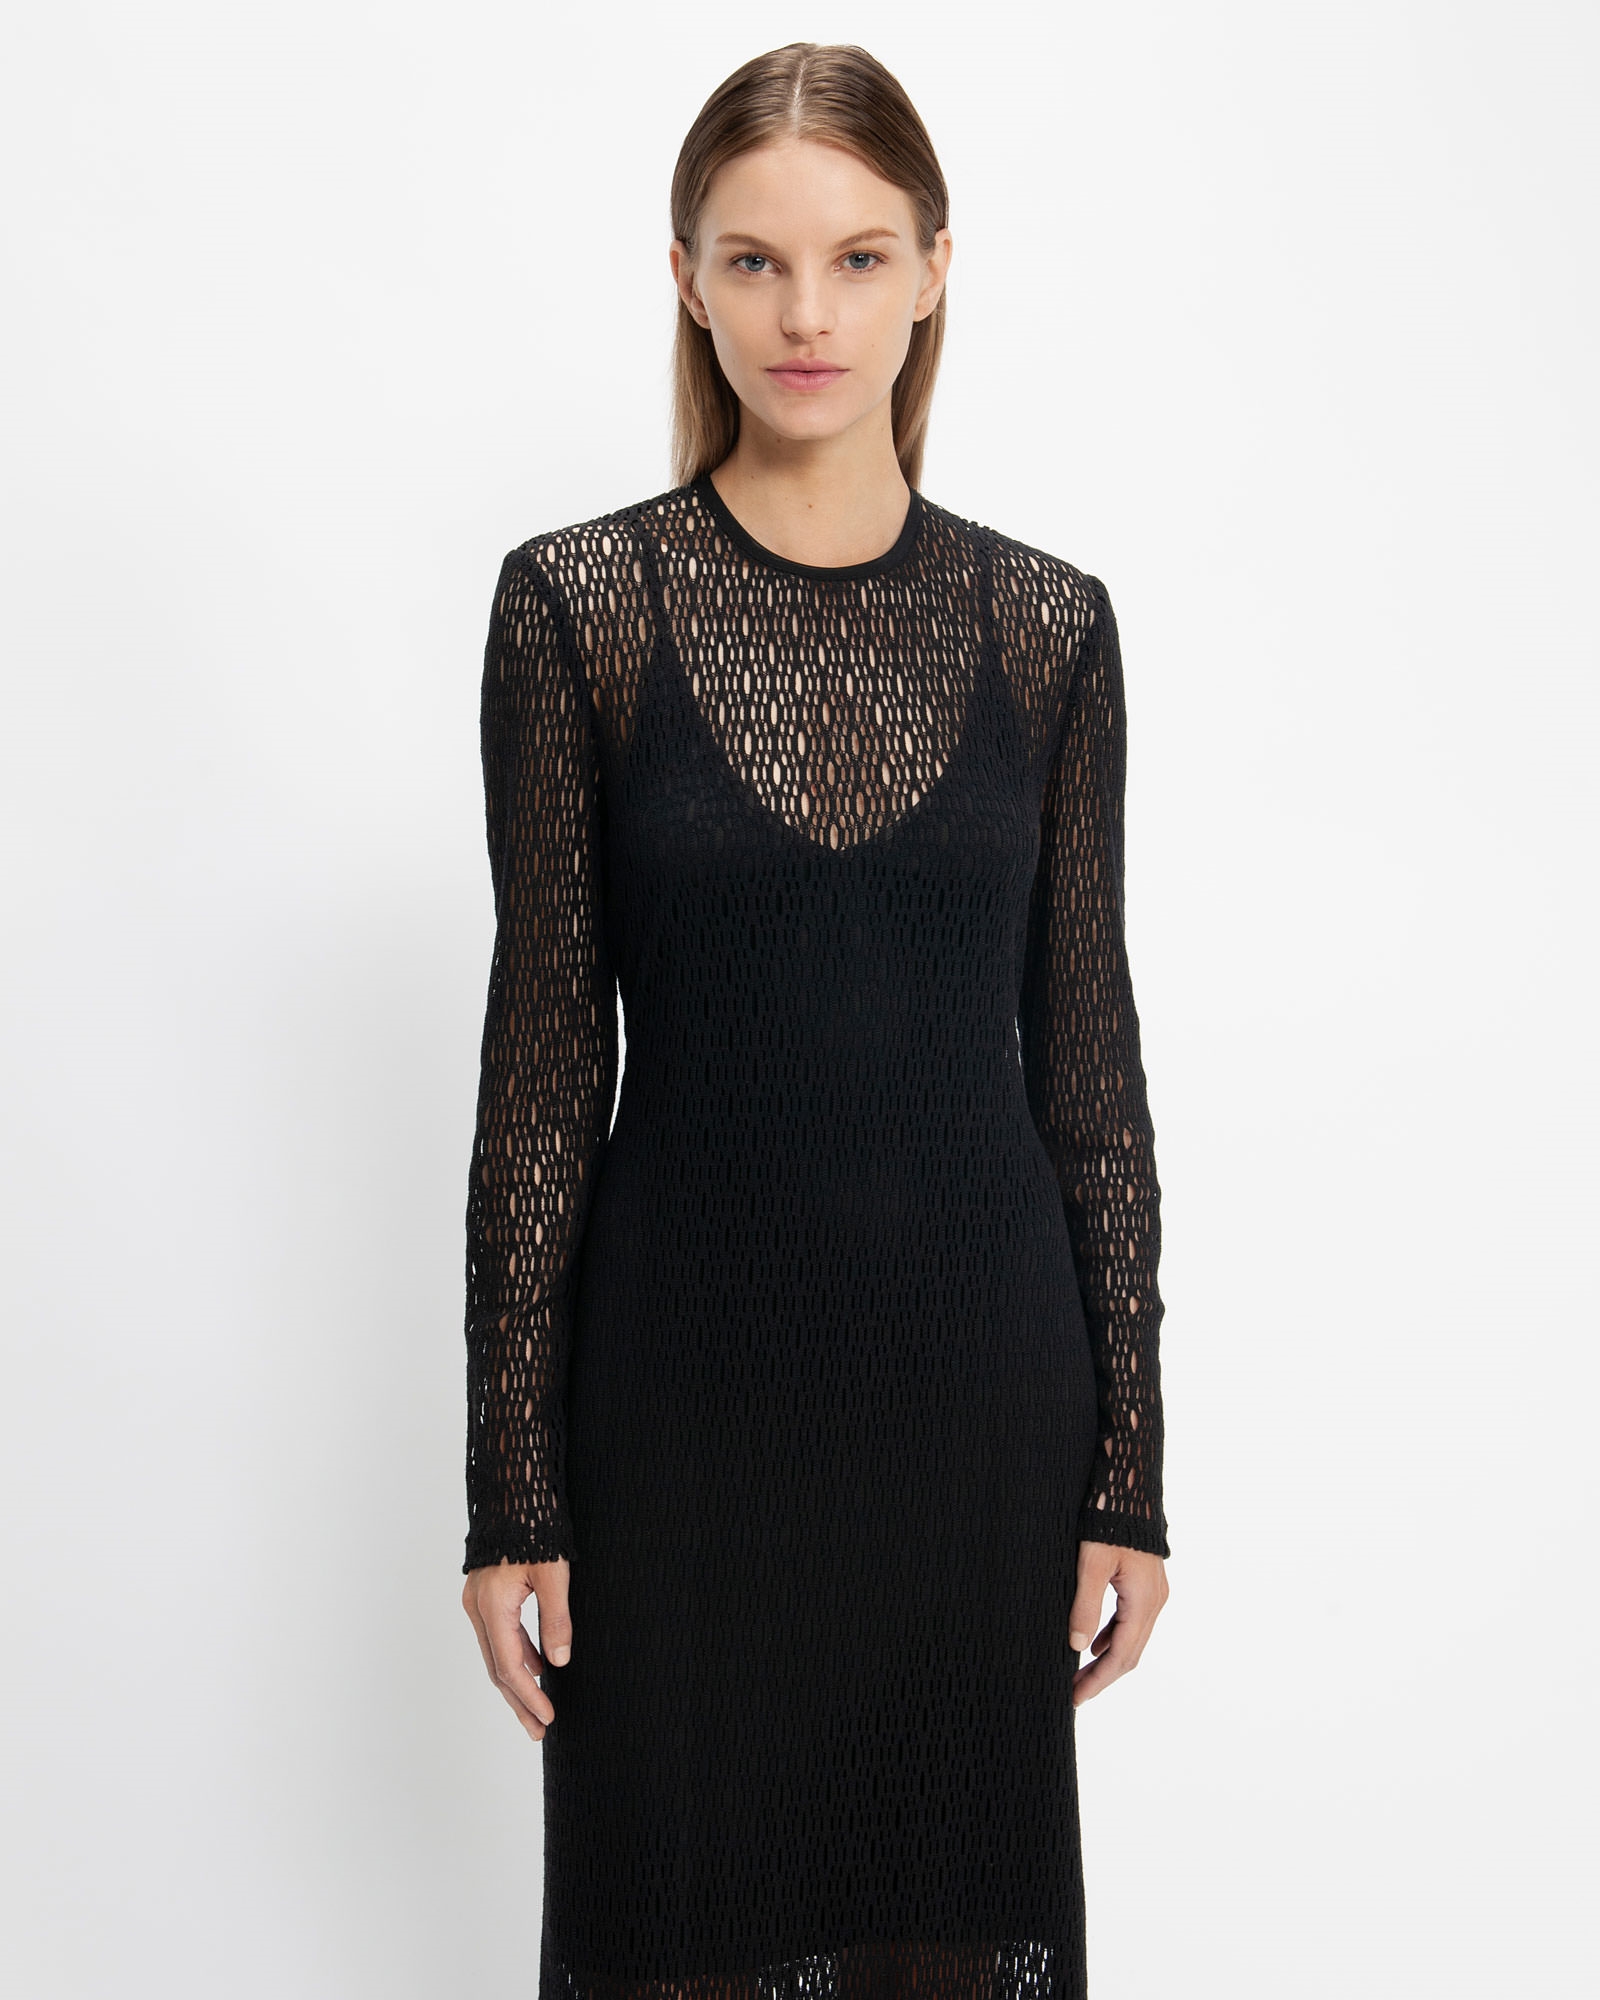 Crochet Mesh Dress | Buy Dresses Online - Cue